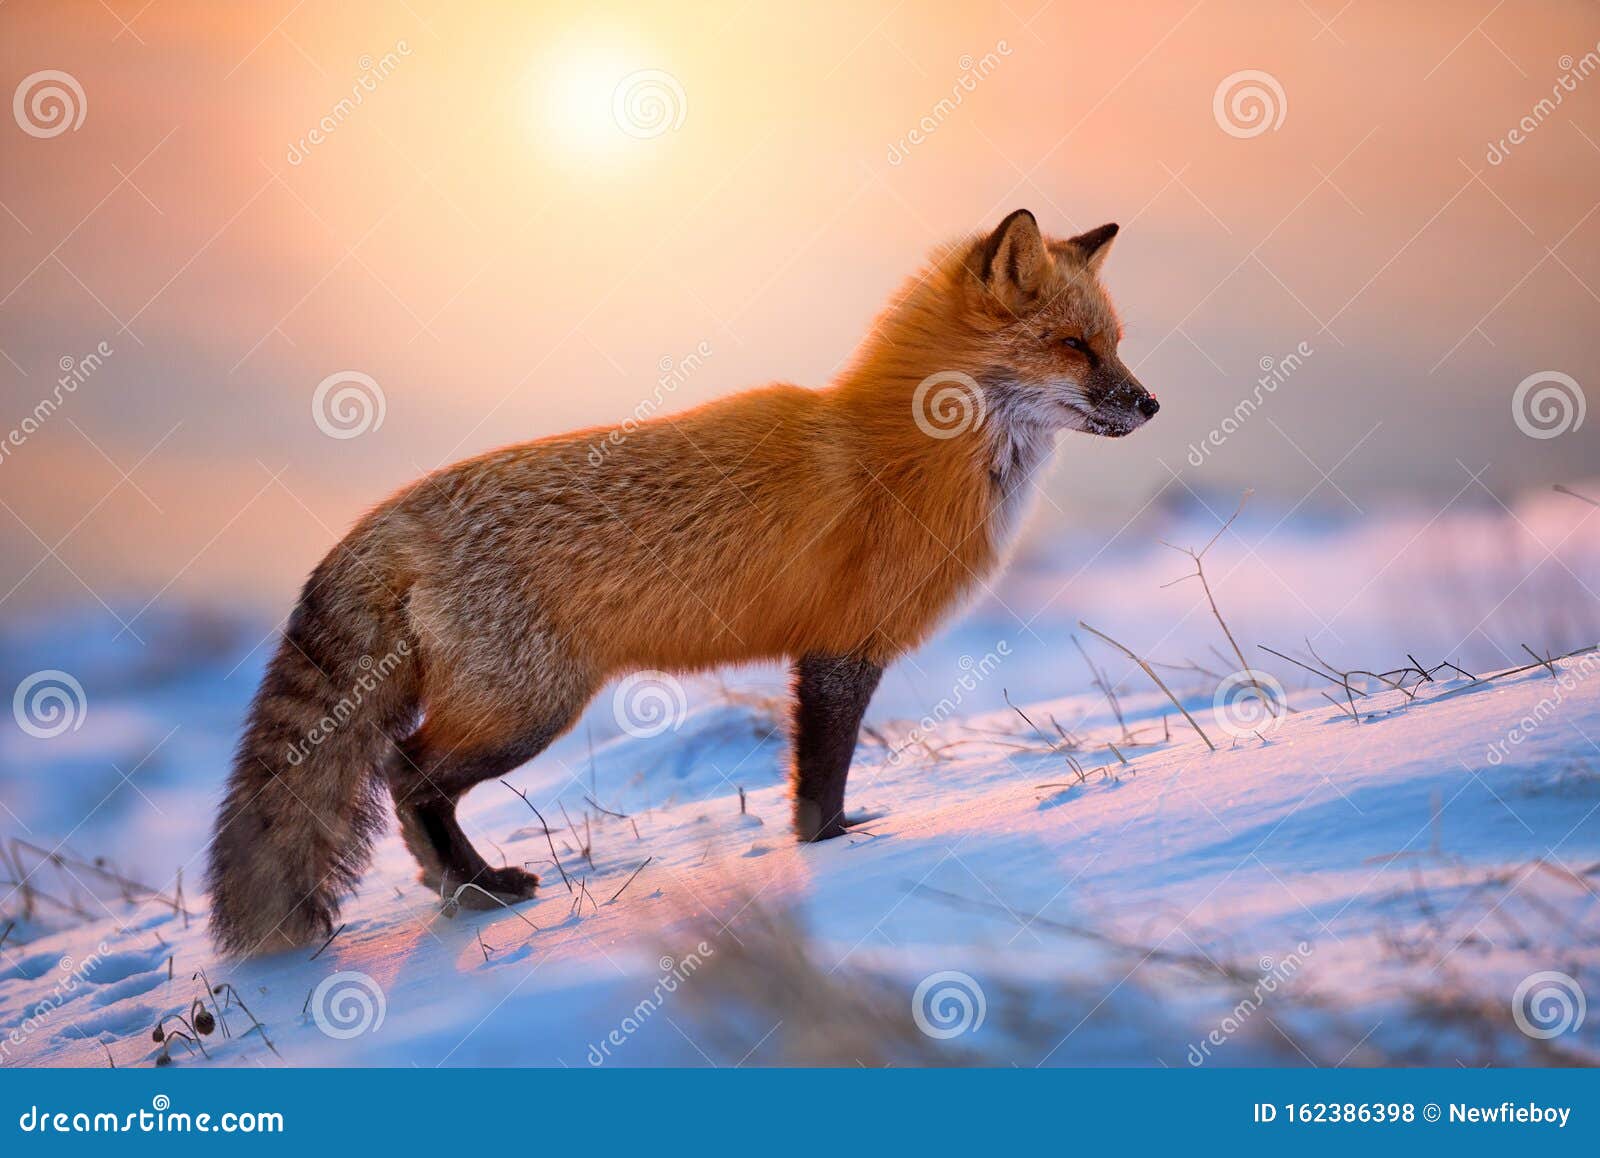 red fox at sunrise